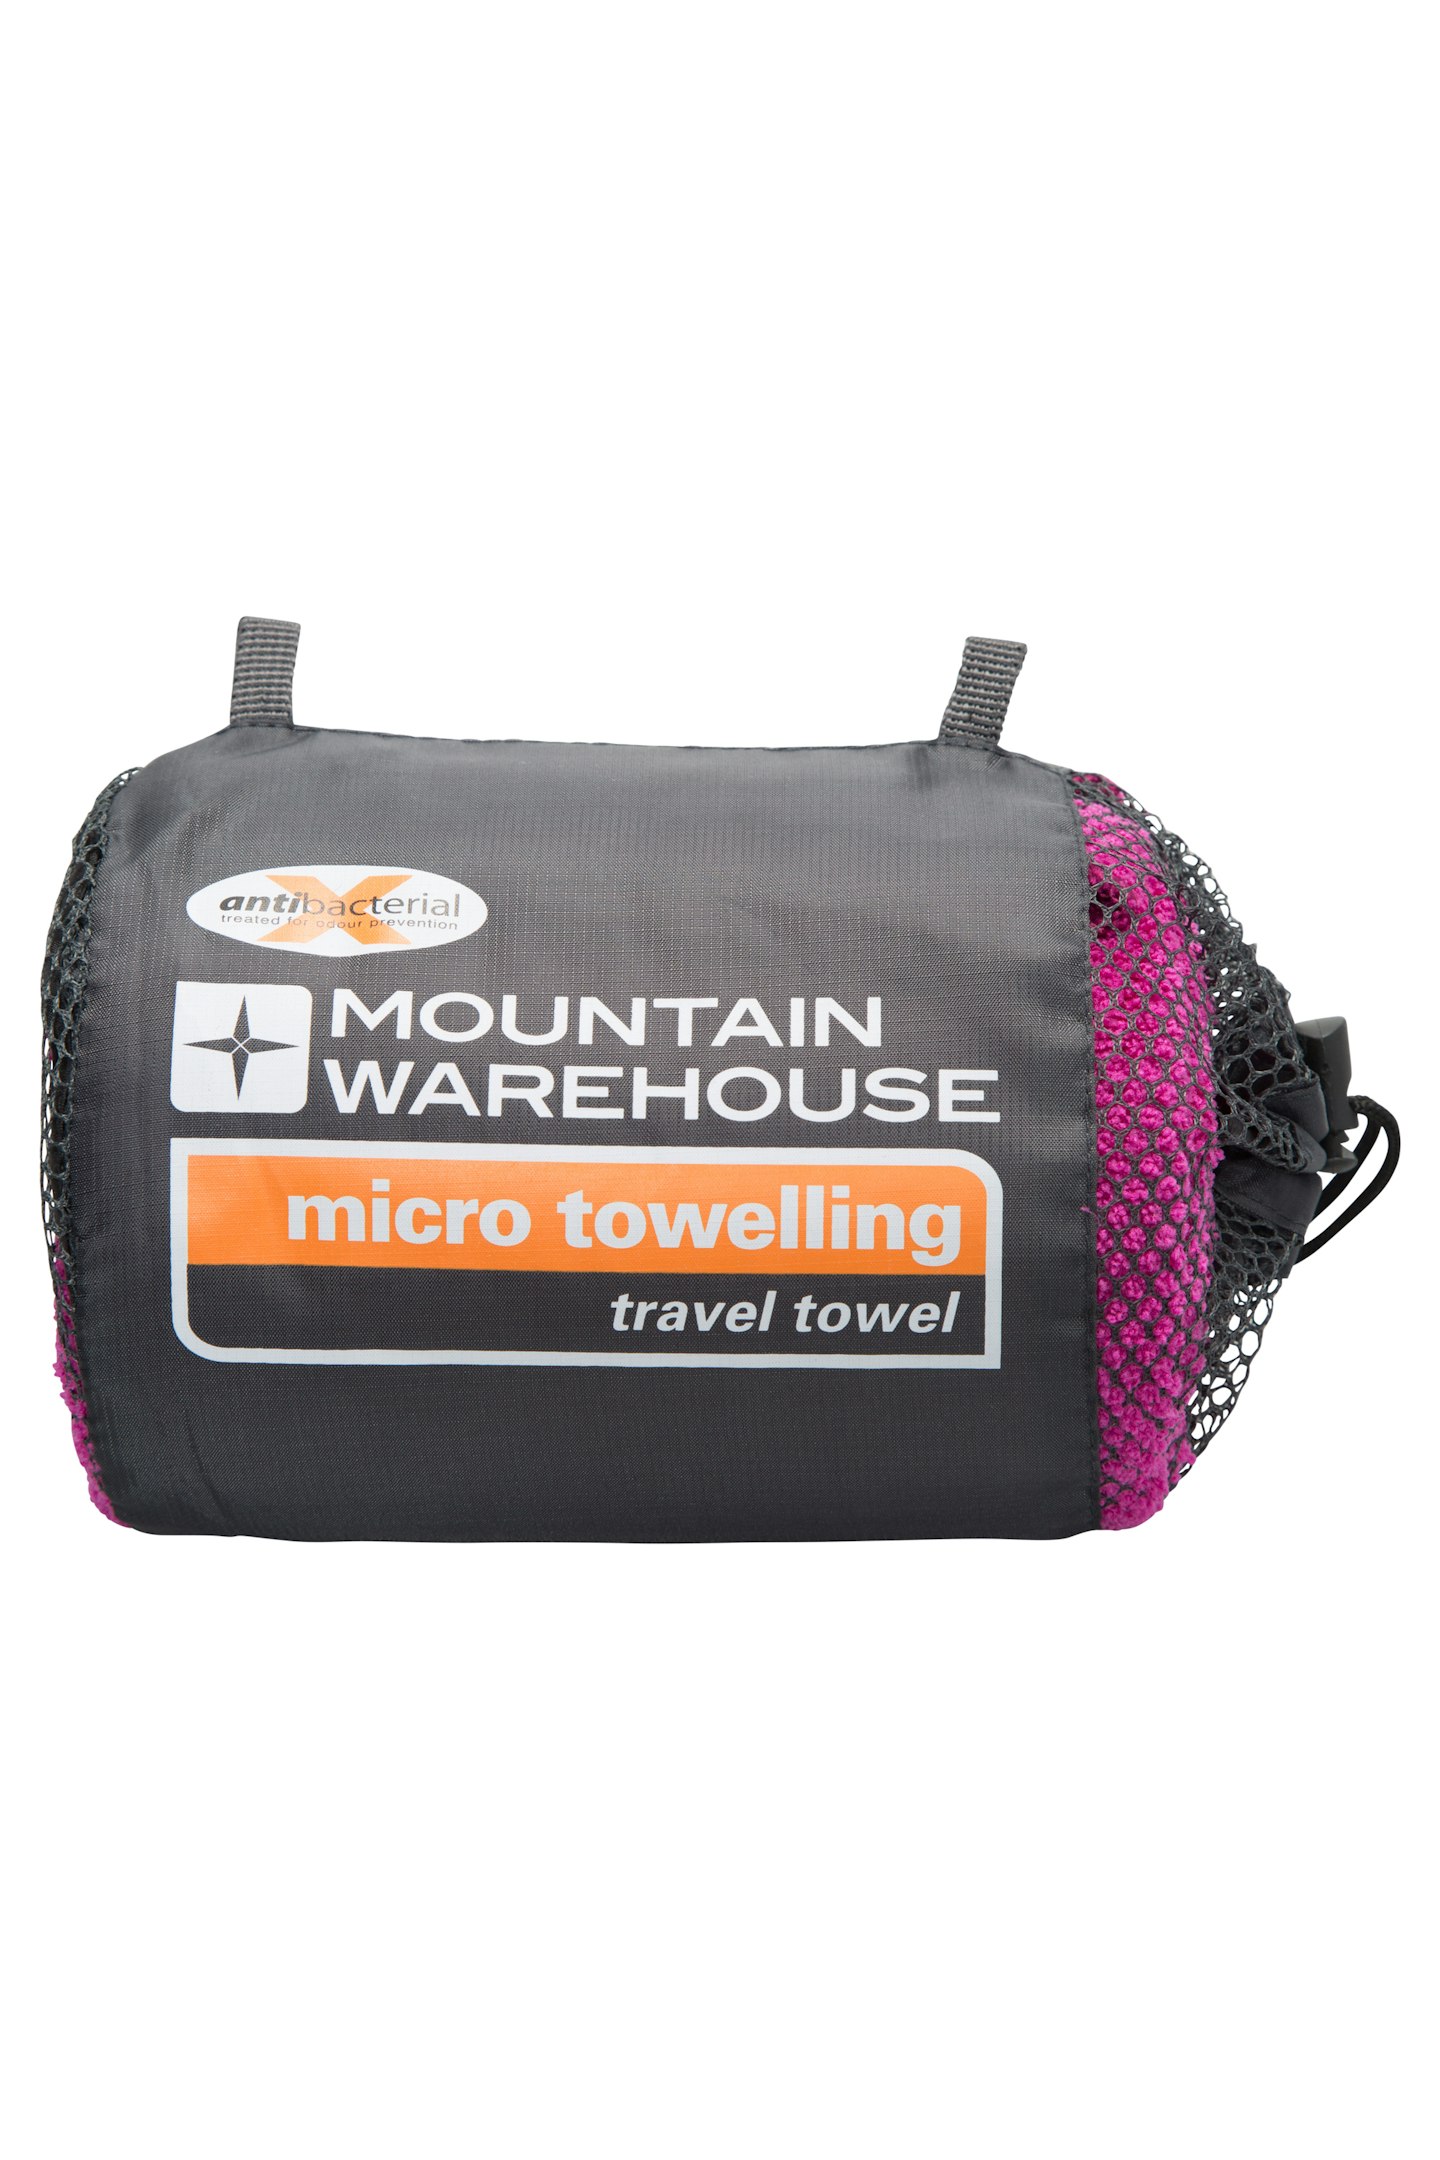 Micro Towelling Travel Towel, £6.99